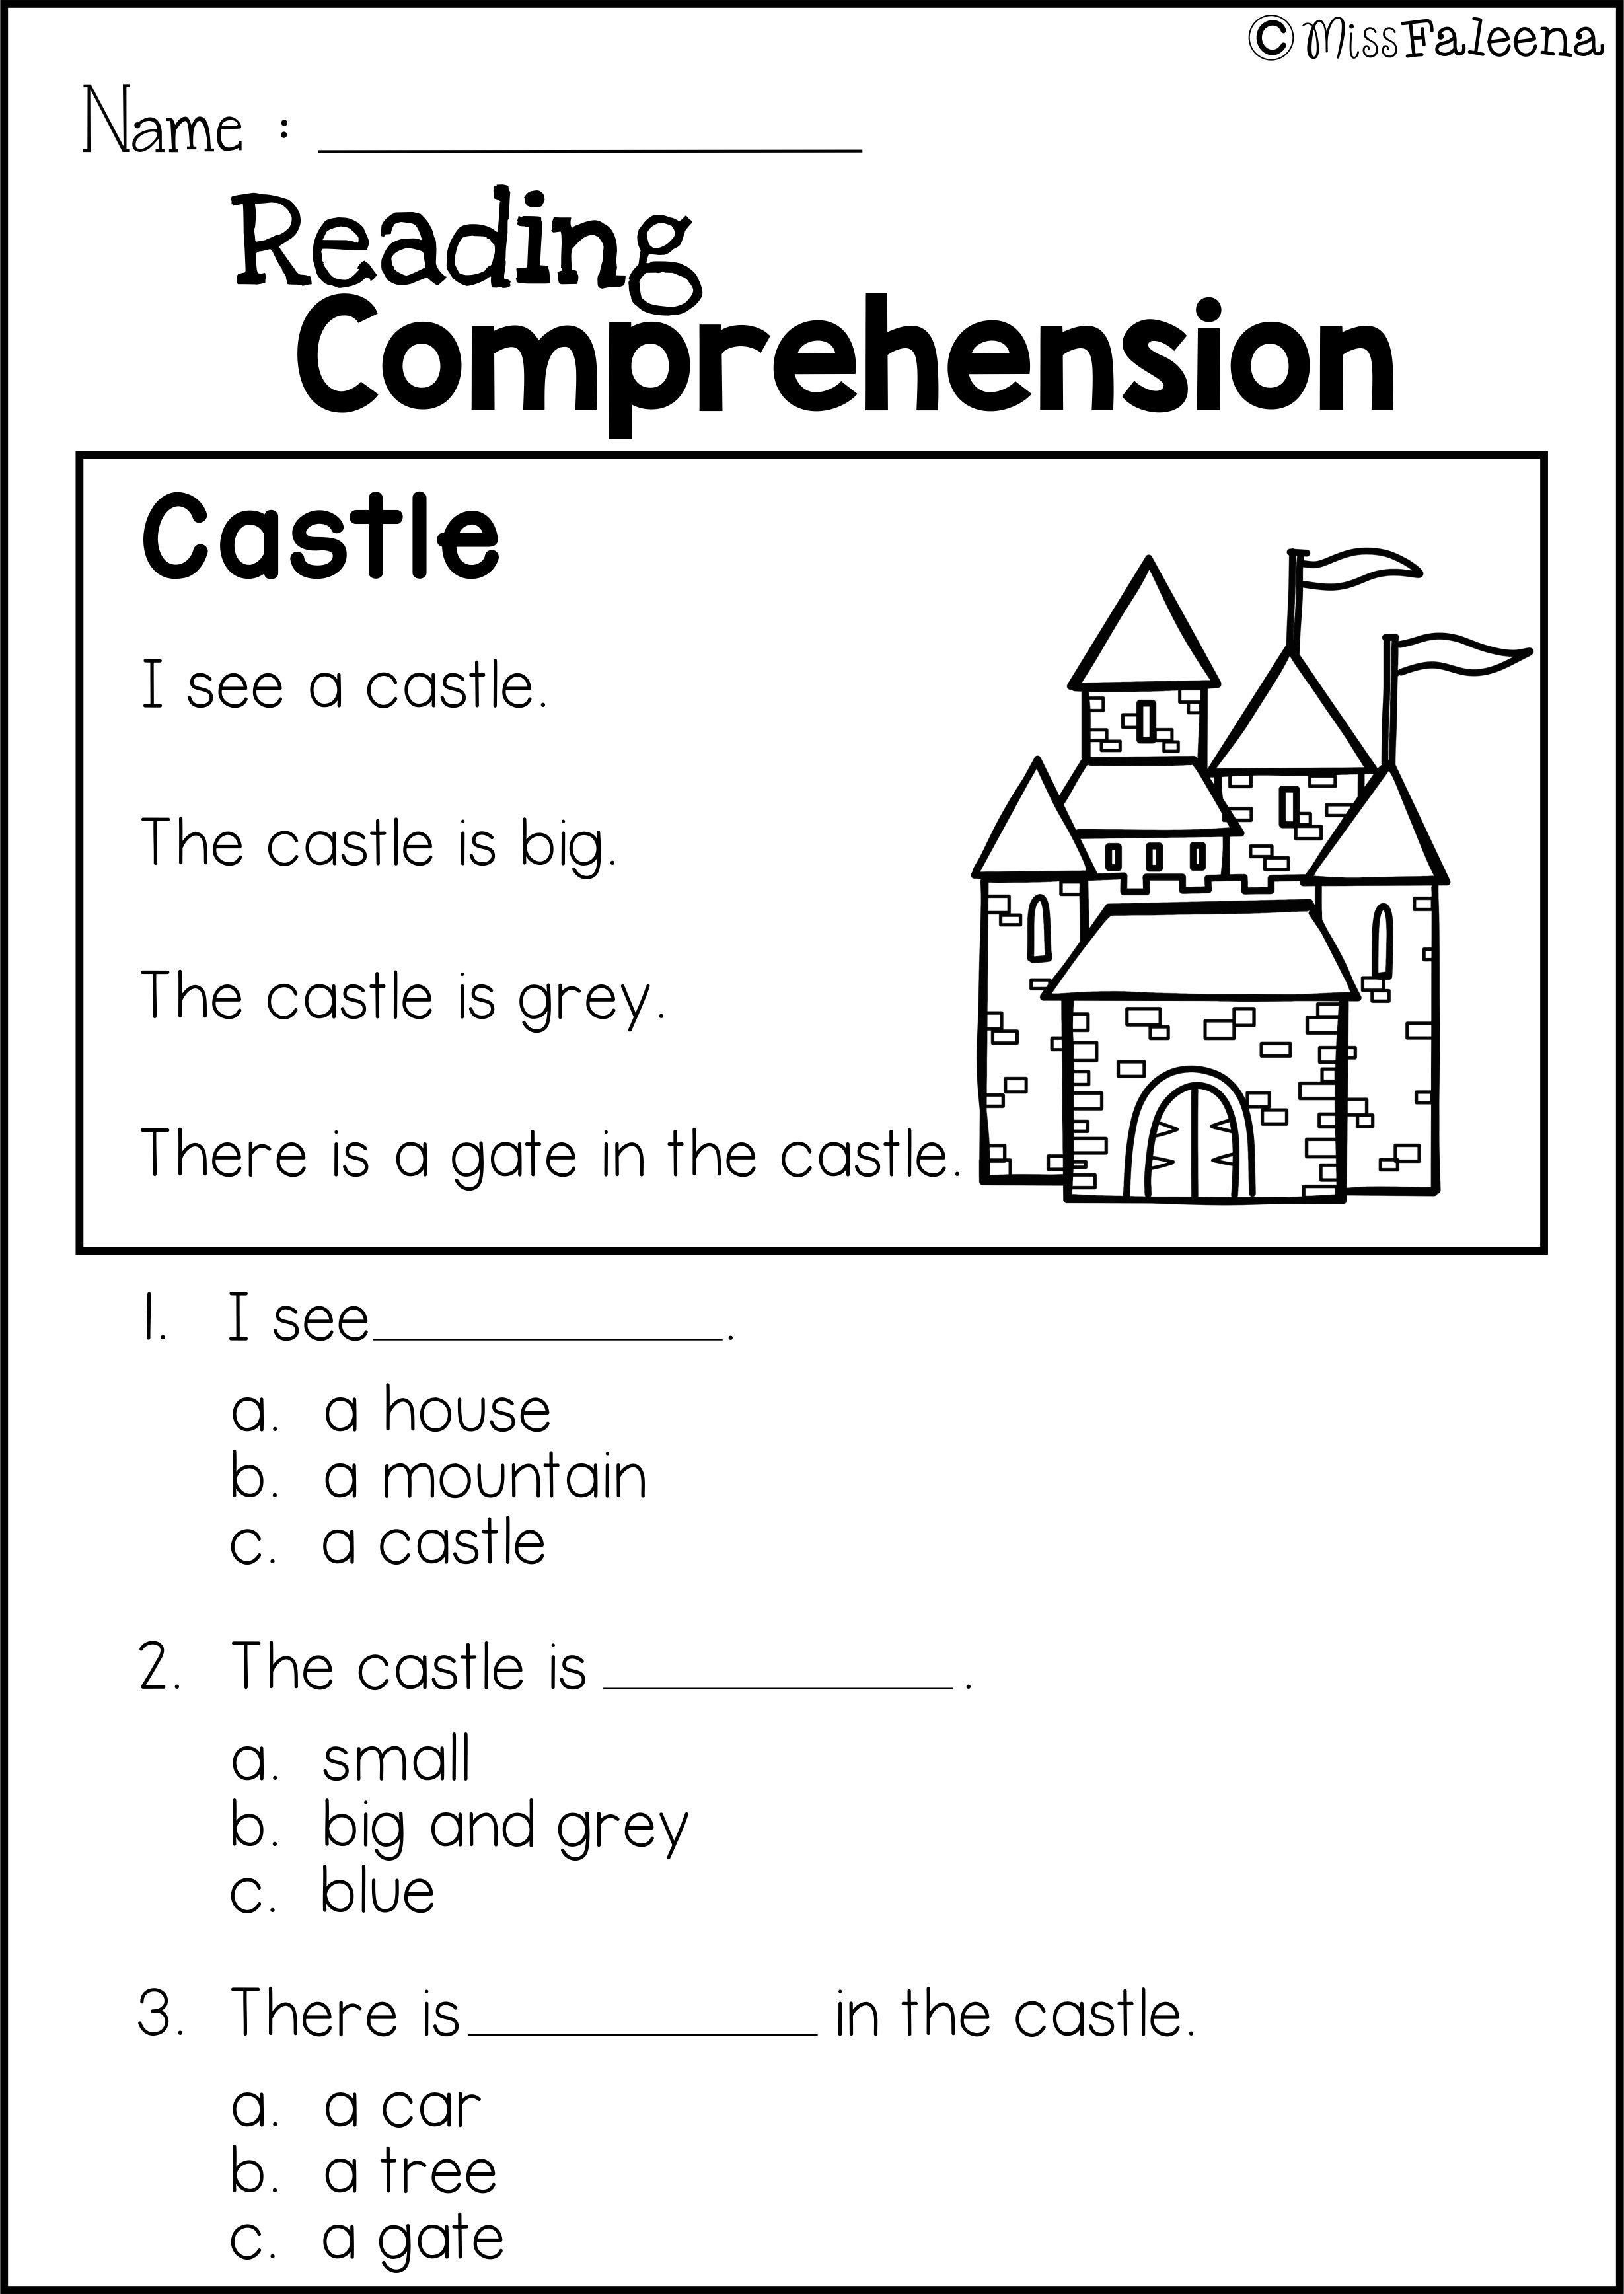 Printable Readingksheets For Kindergarten Free English Pdf Ela - Free Printable Reading Comprehension Worksheets For Kindergarten